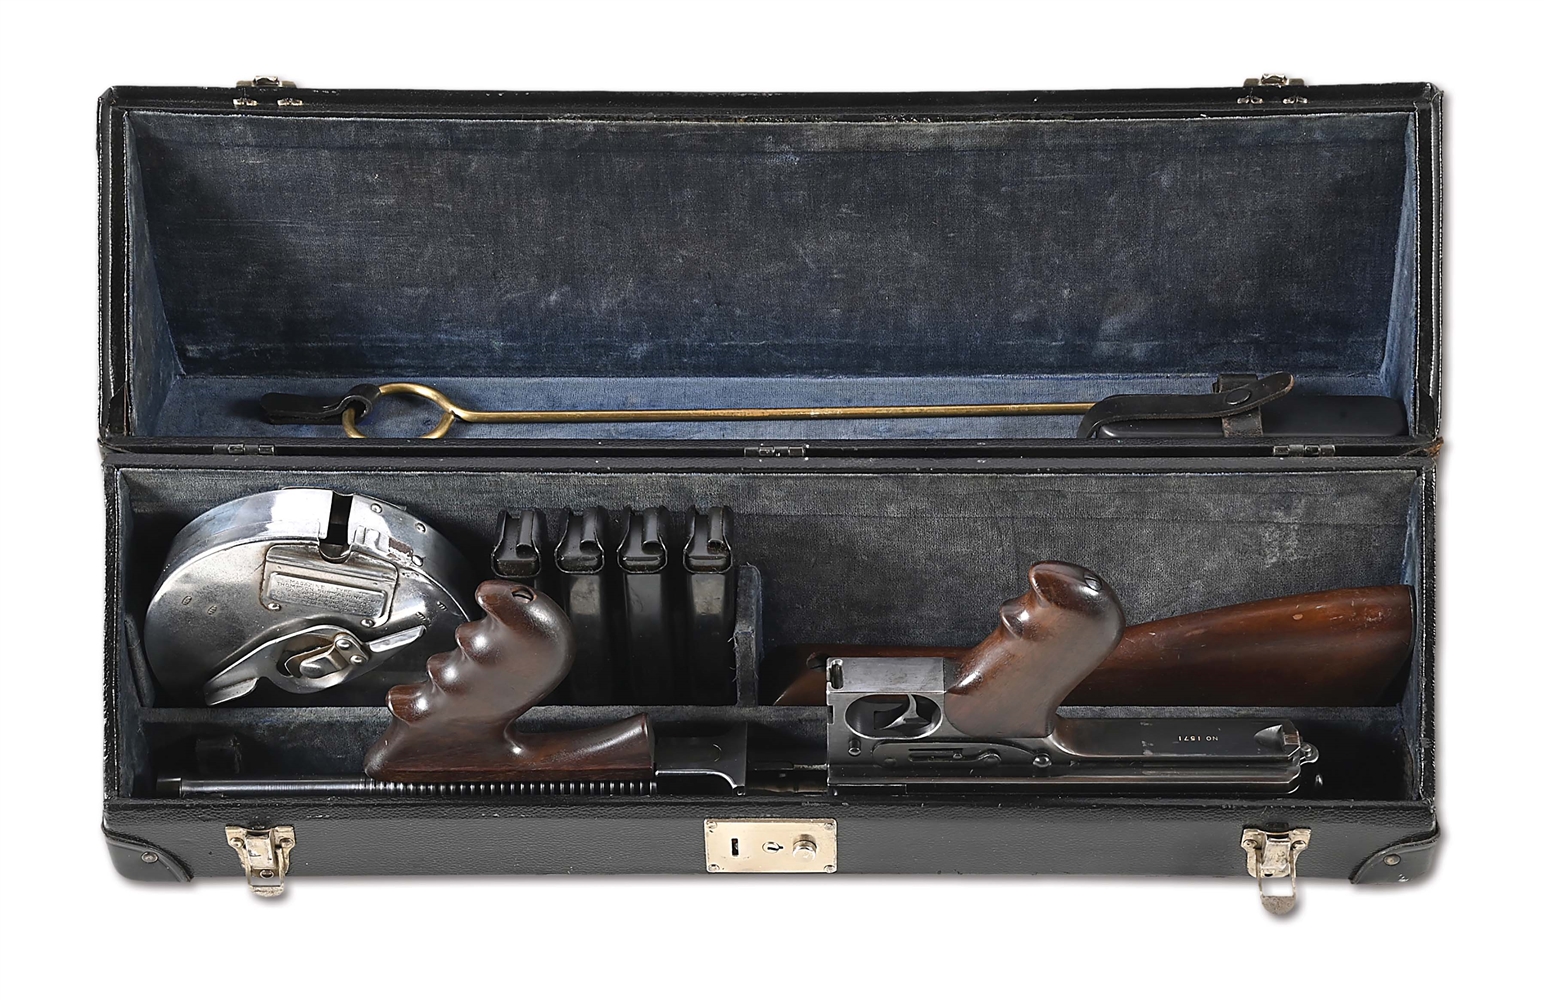 (N) EXCEPTIONAL HIGH ORIGINAL CONDITION COLT 1921A THOMPSON 1921 MACHINE GUN WITH ORIGINAL HARD CASE (CURIO AND RELIC).